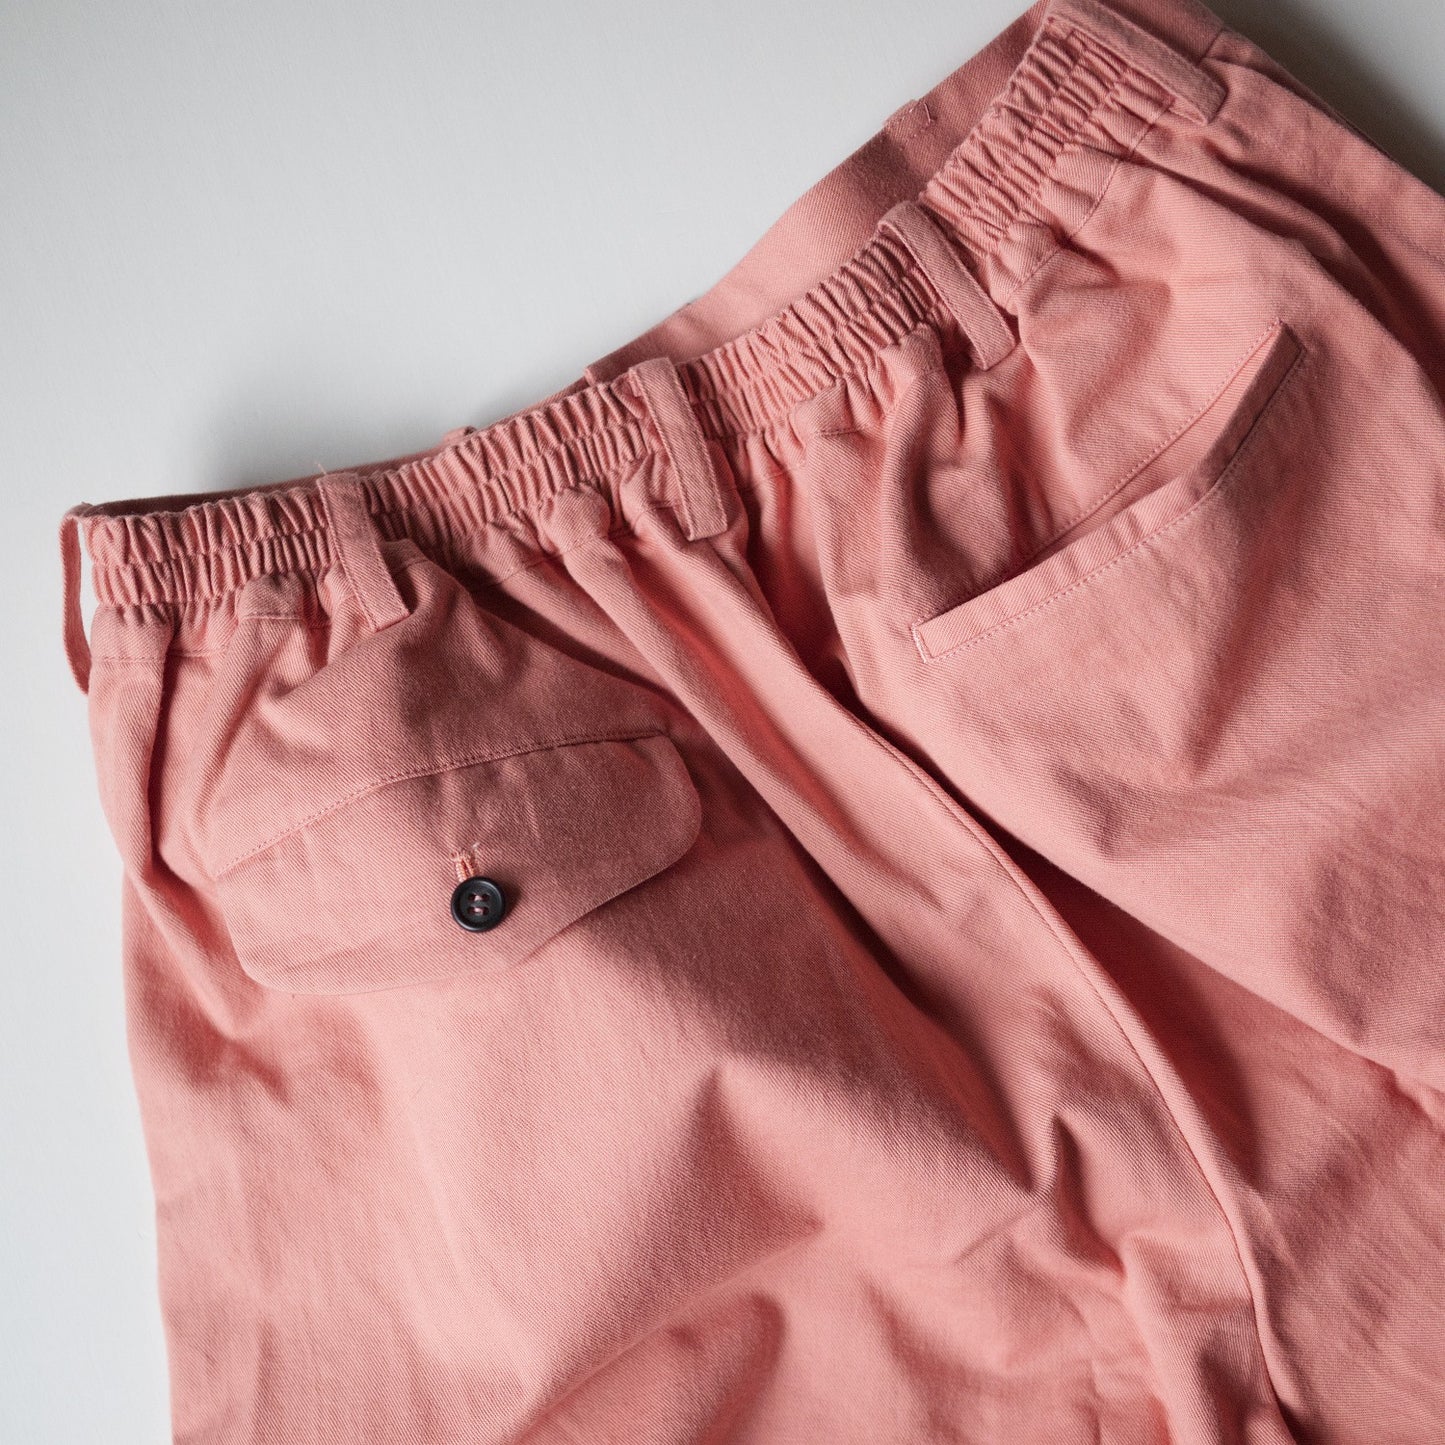 inside-out short slacks pants